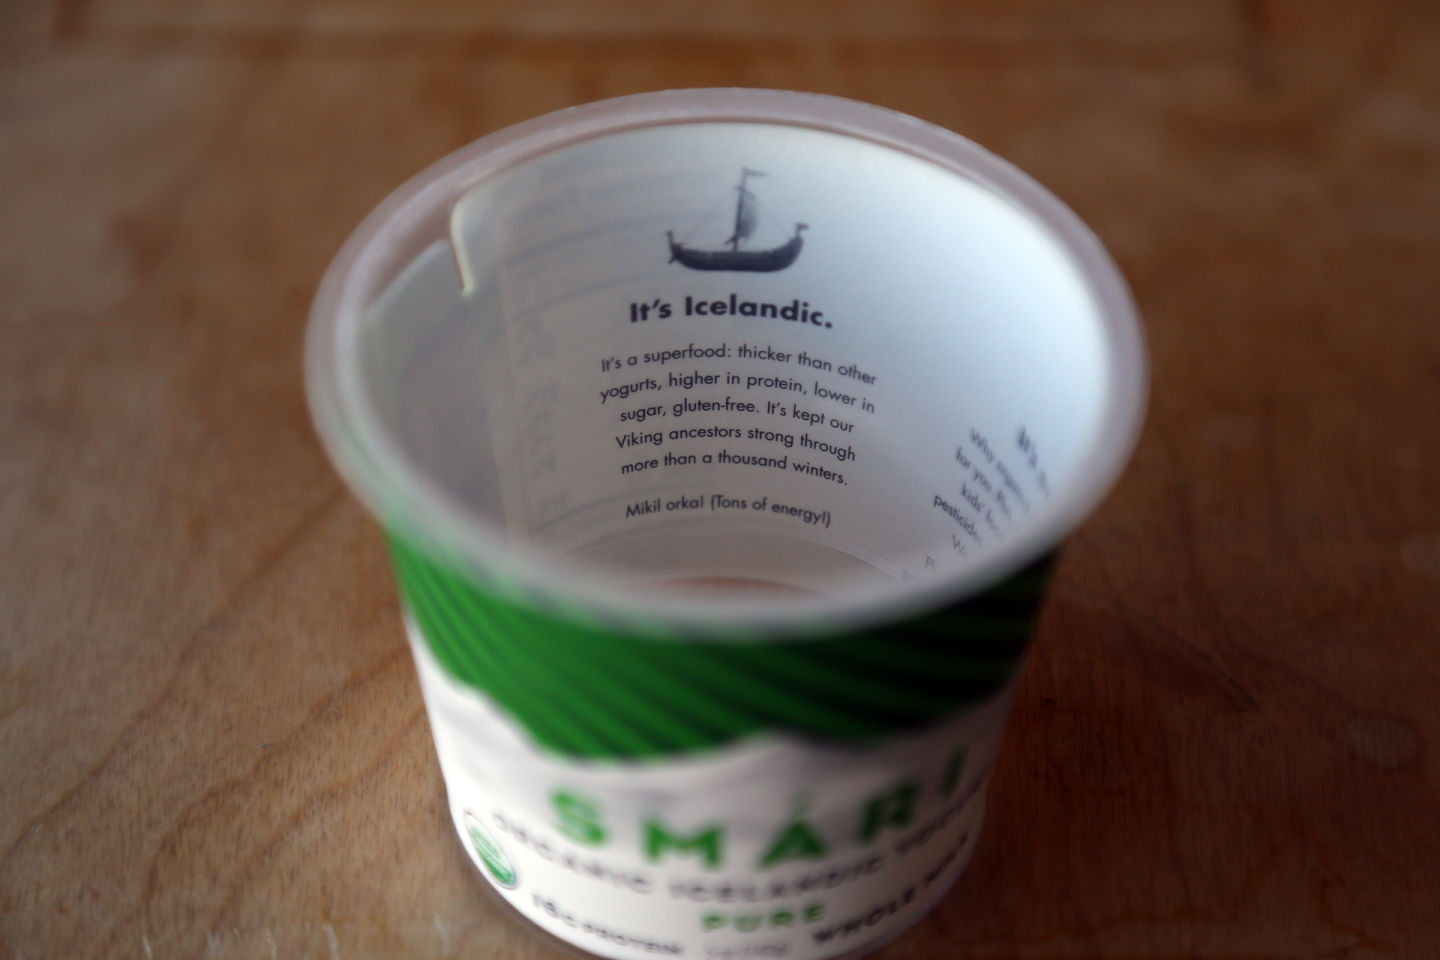 It's Icelandic. Interior design inside a cup of Smári yogurt. Wendy Goodfriend